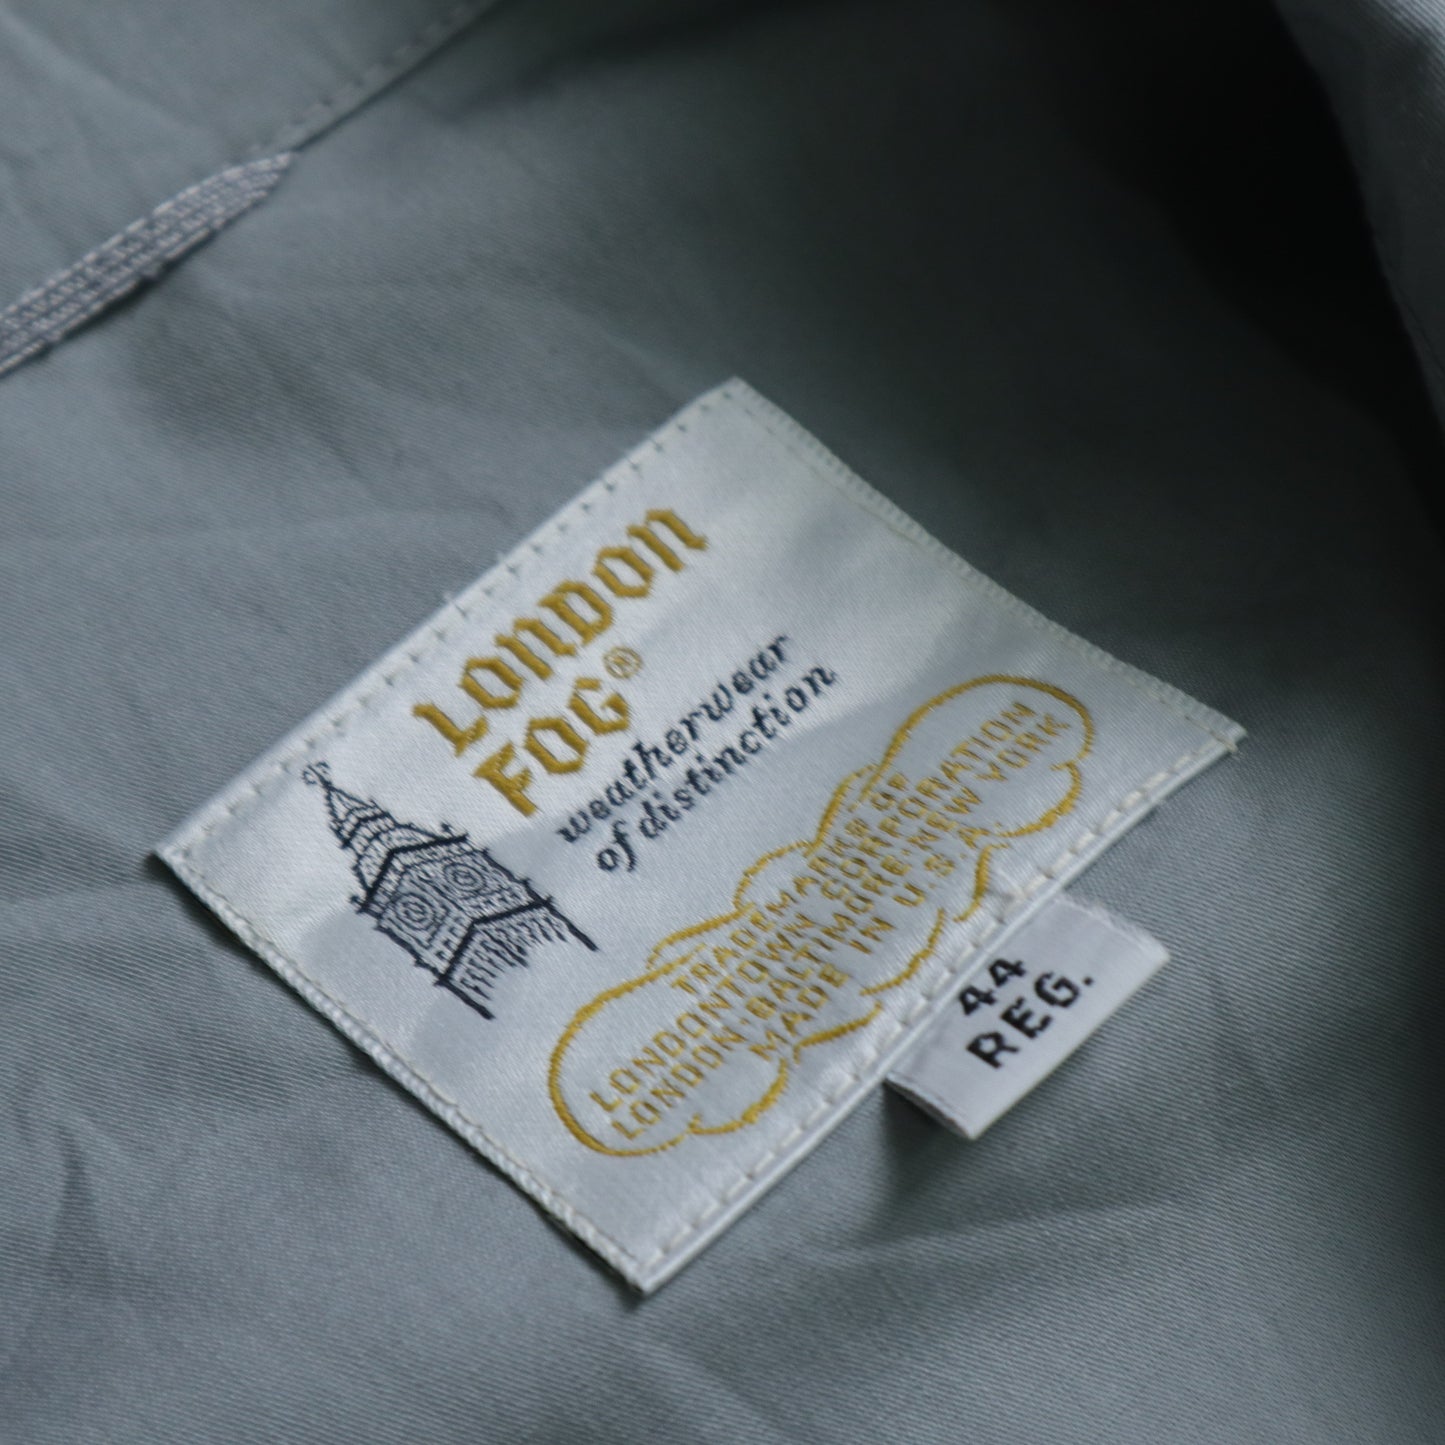 80s London Fog American cement gray Harrington coat IDEAL zipper